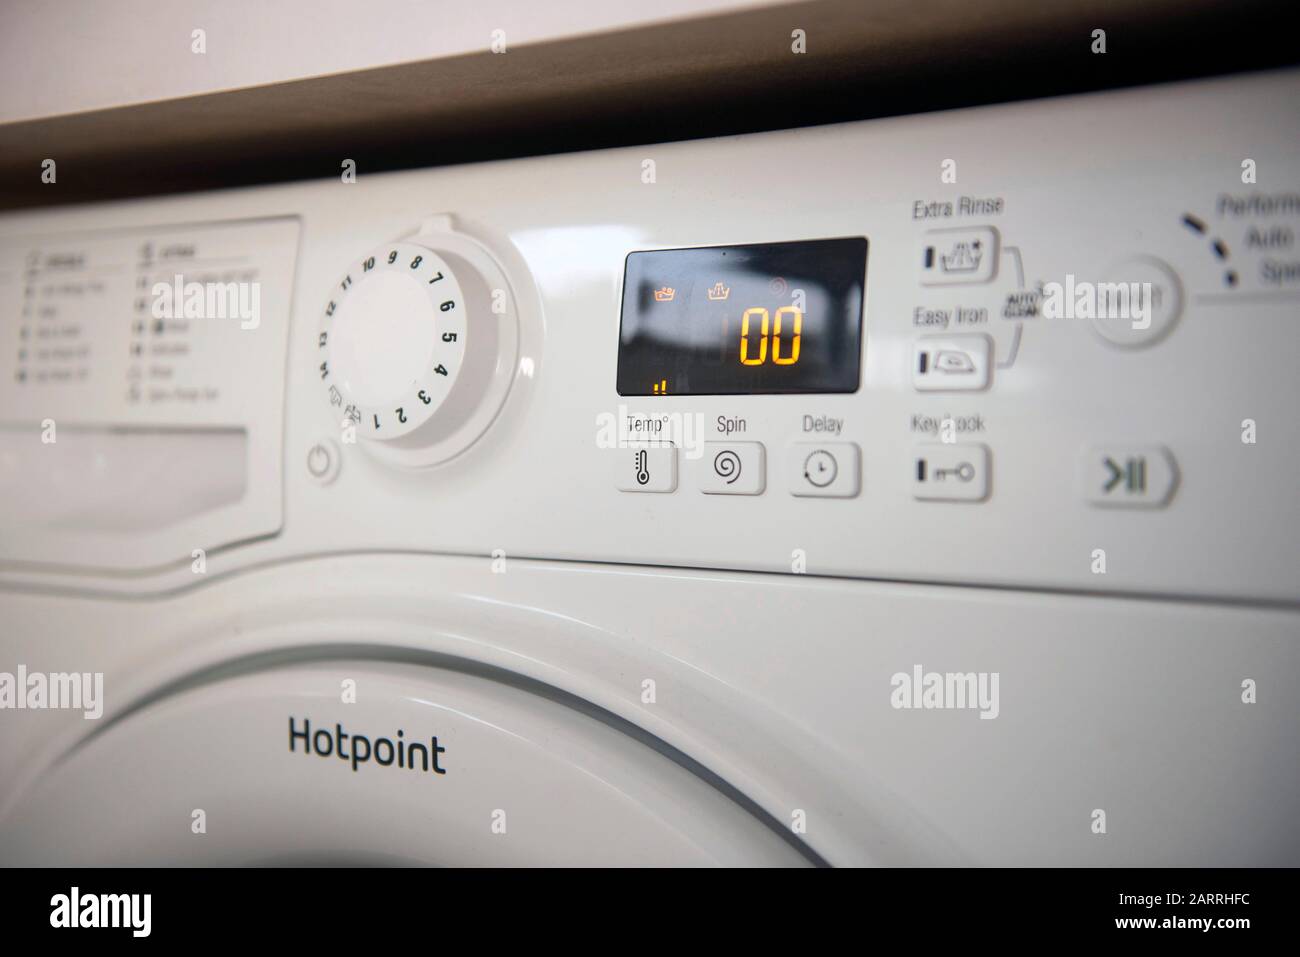 Uk Washing Machine High Resolution Stock Photography and Images - Alamy